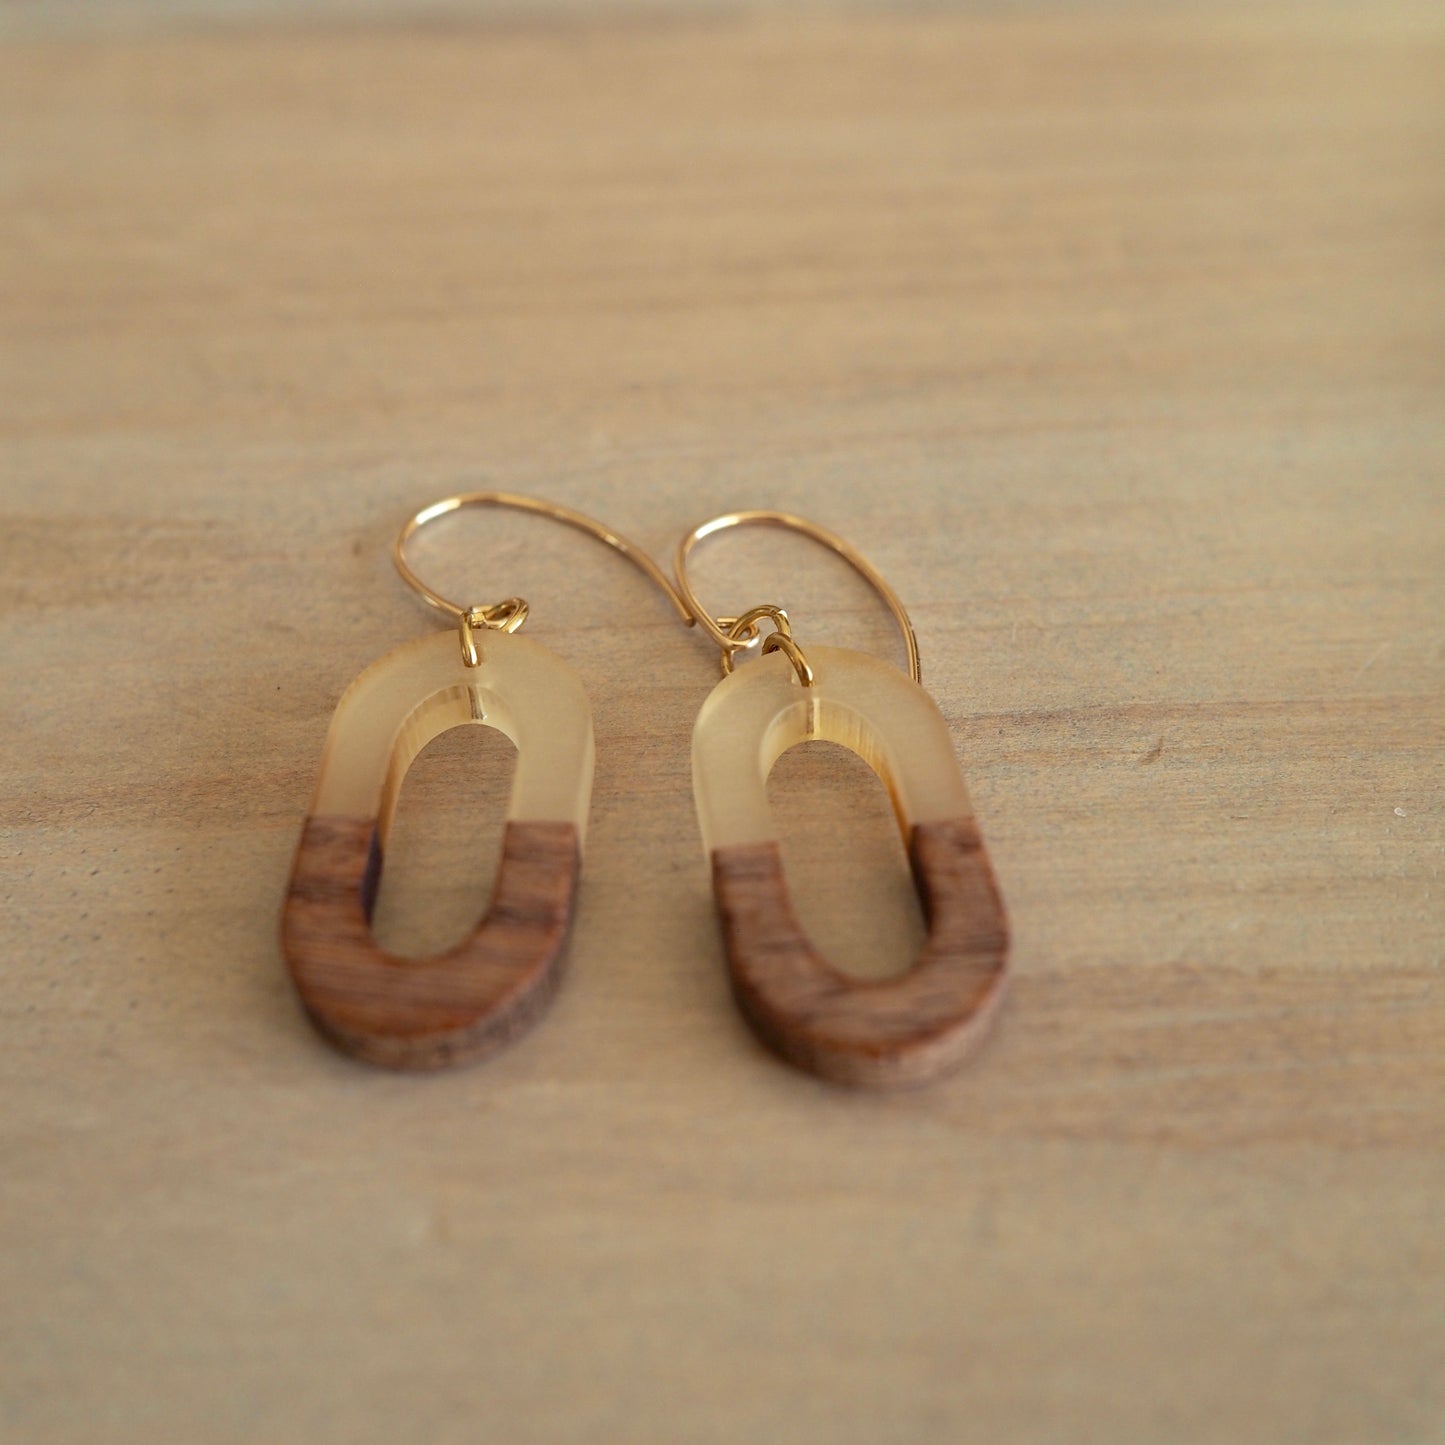 Wood and resin oval geometric earrings by Wallis Designs